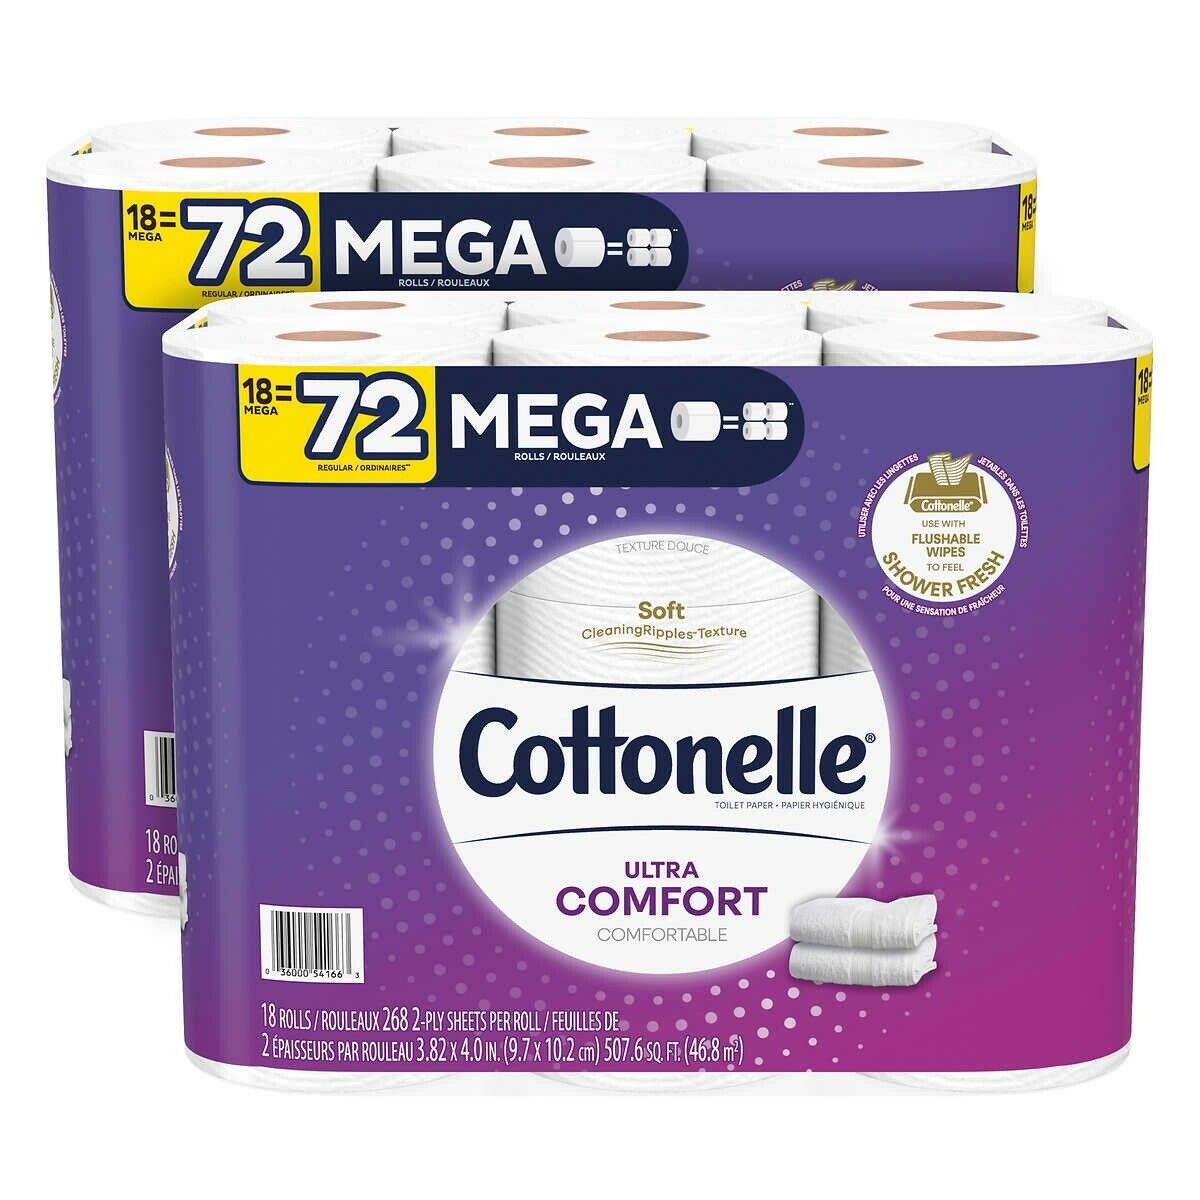 Cottonelle Ultra Comfort Bath Tissue, 2-Ply, 268 Sheets, 36 MEGA Rolls